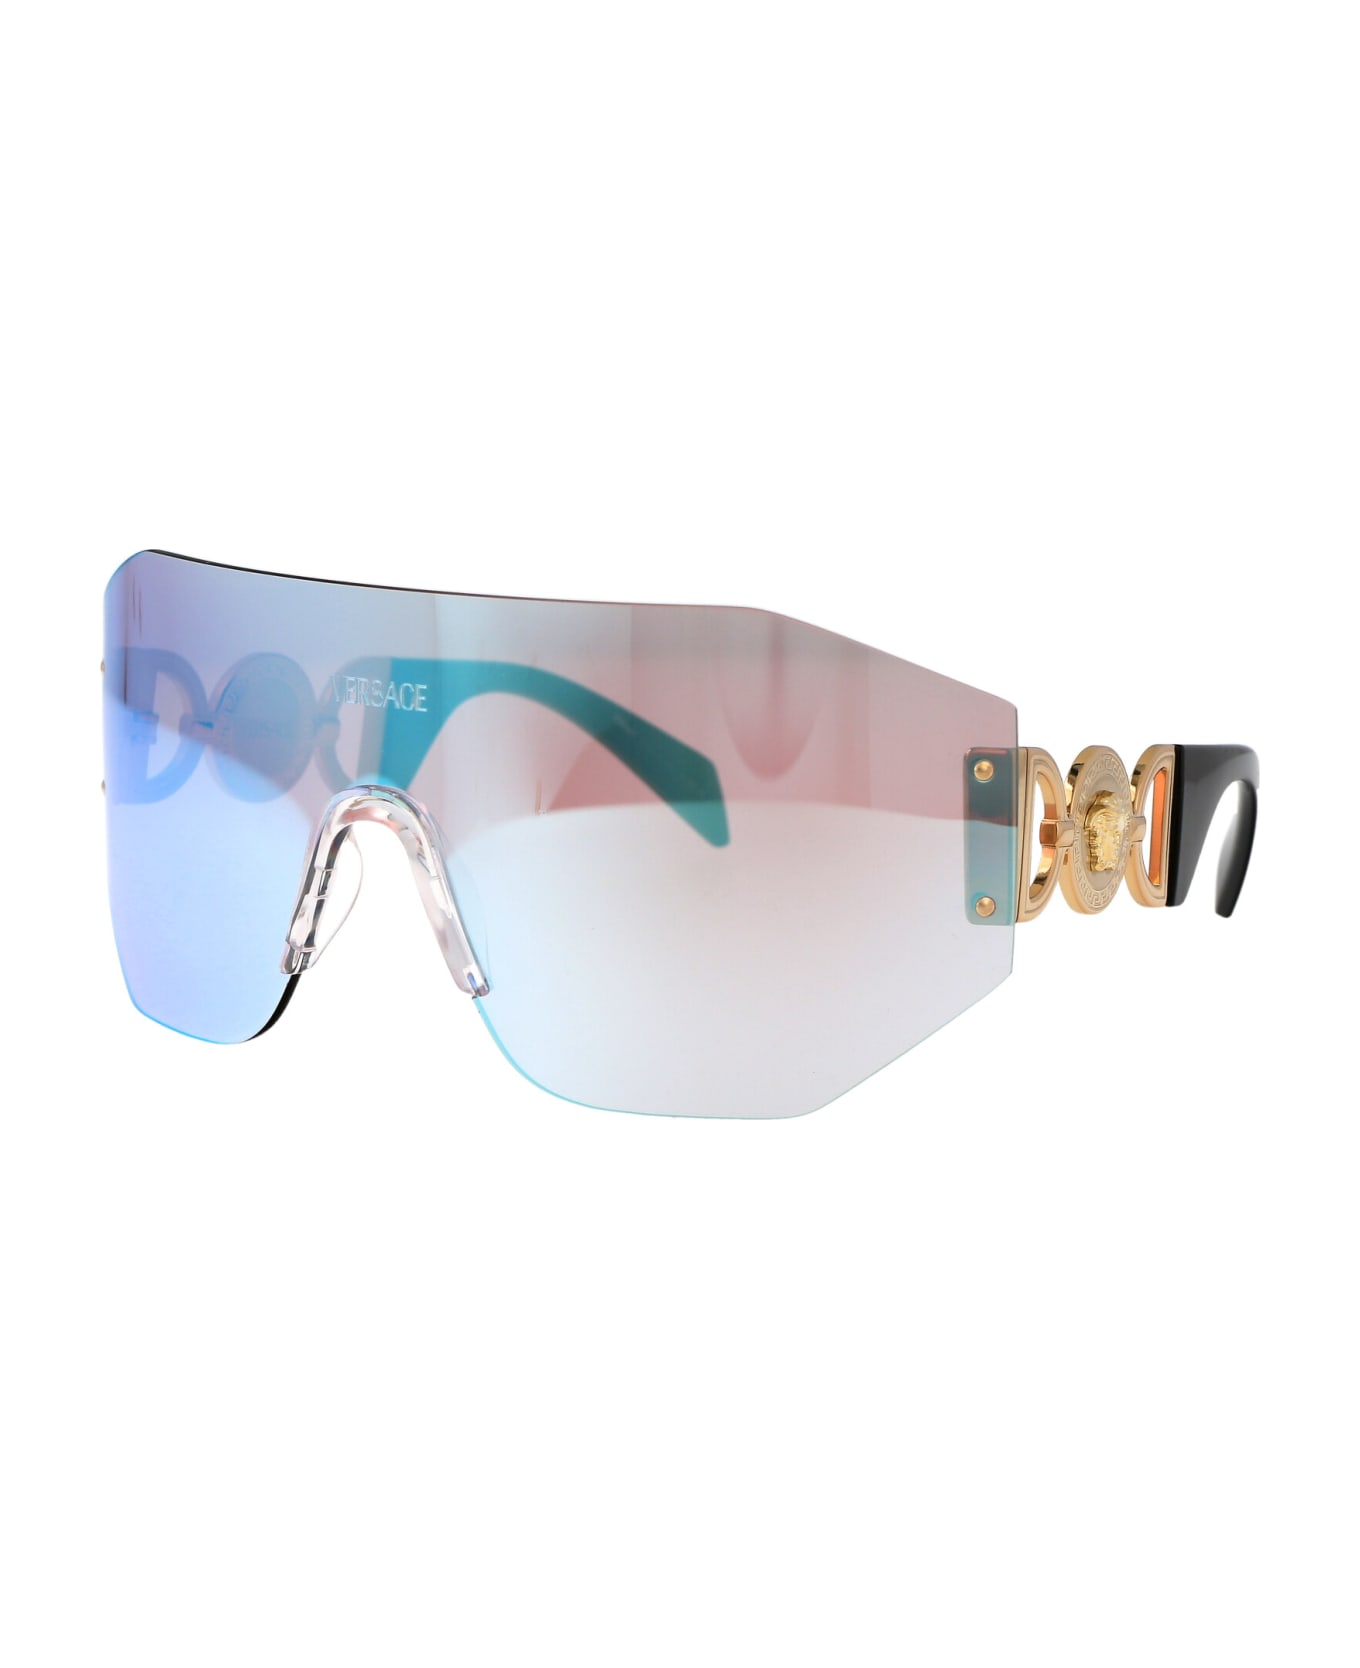 Versace Eyewear 0ve2258 Sunglasses - 1002MA Pink Mirror Blue